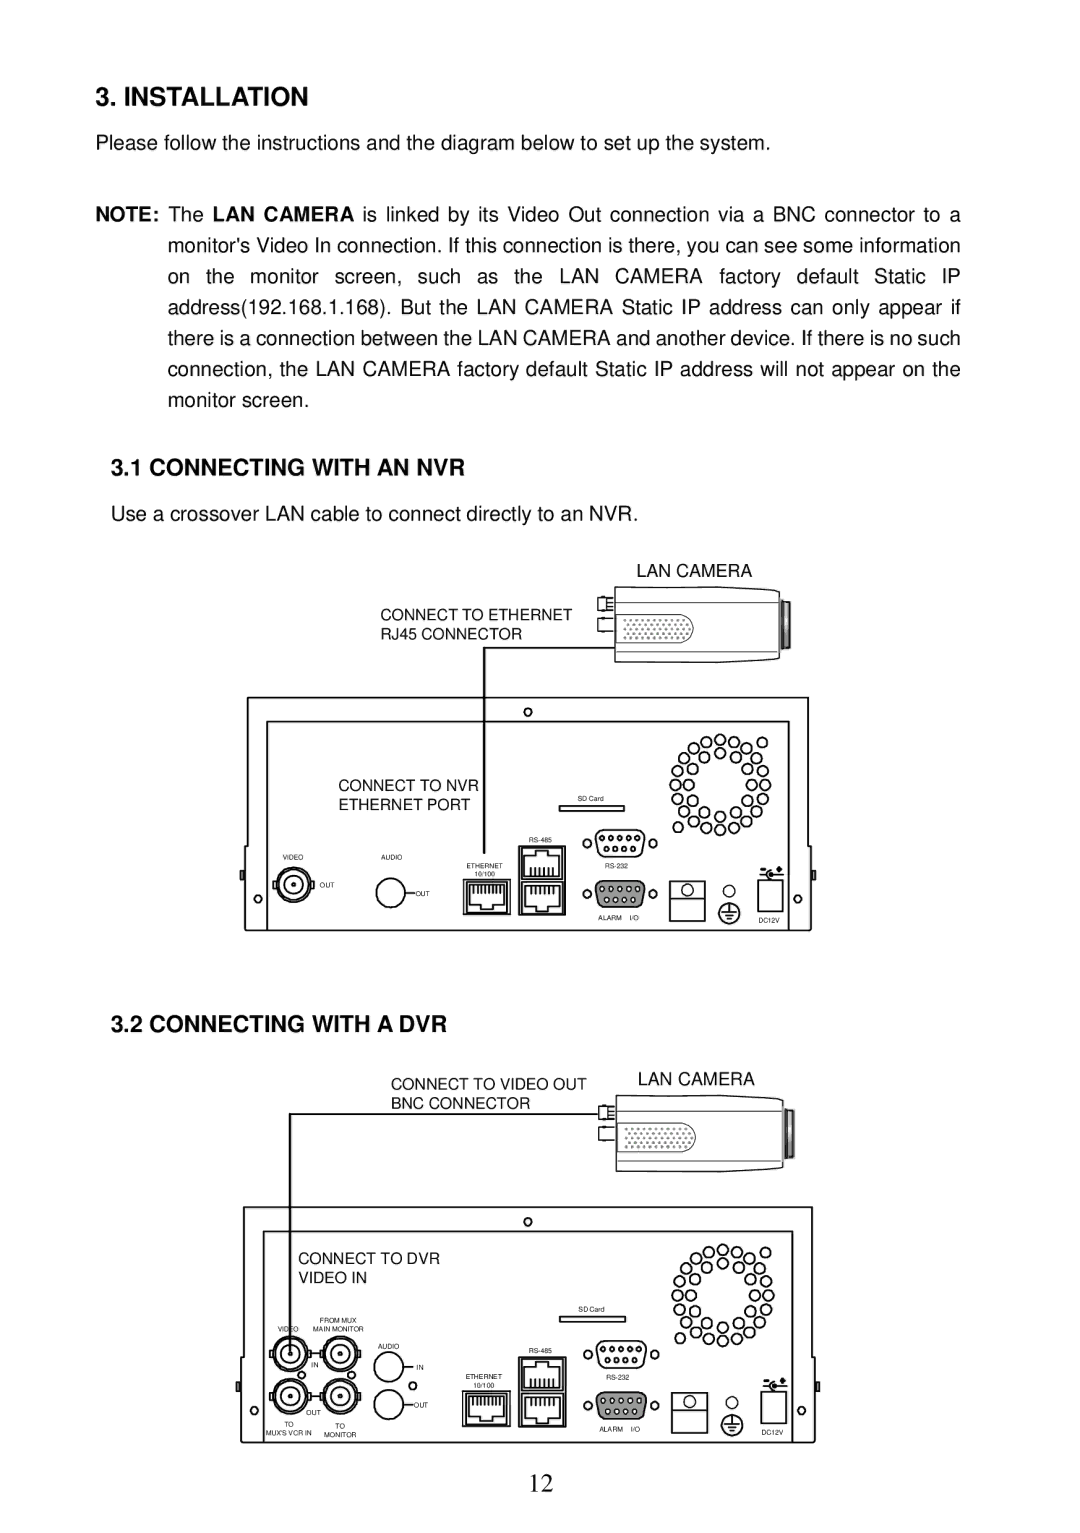 Sony MPEG4 LAN Camera operation manual Installation 